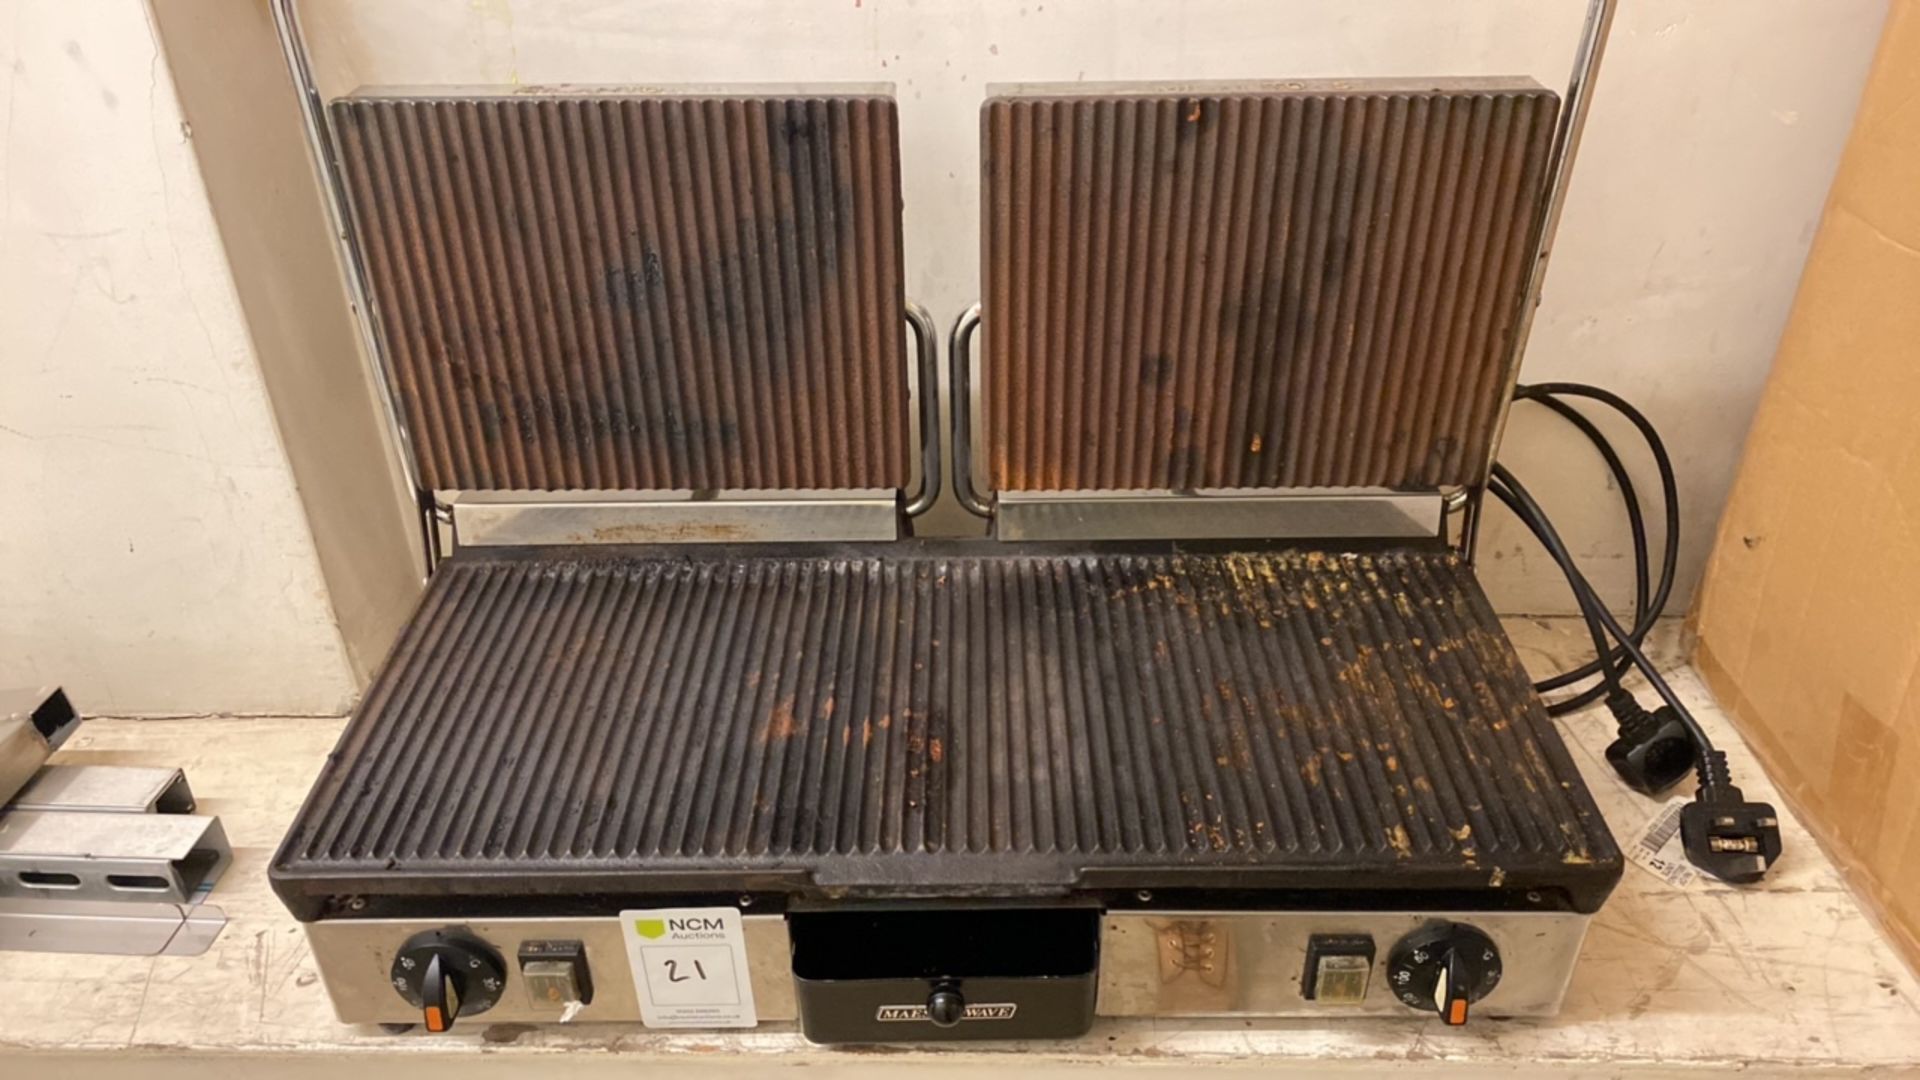 Maestrowave toaster - Image 4 of 6